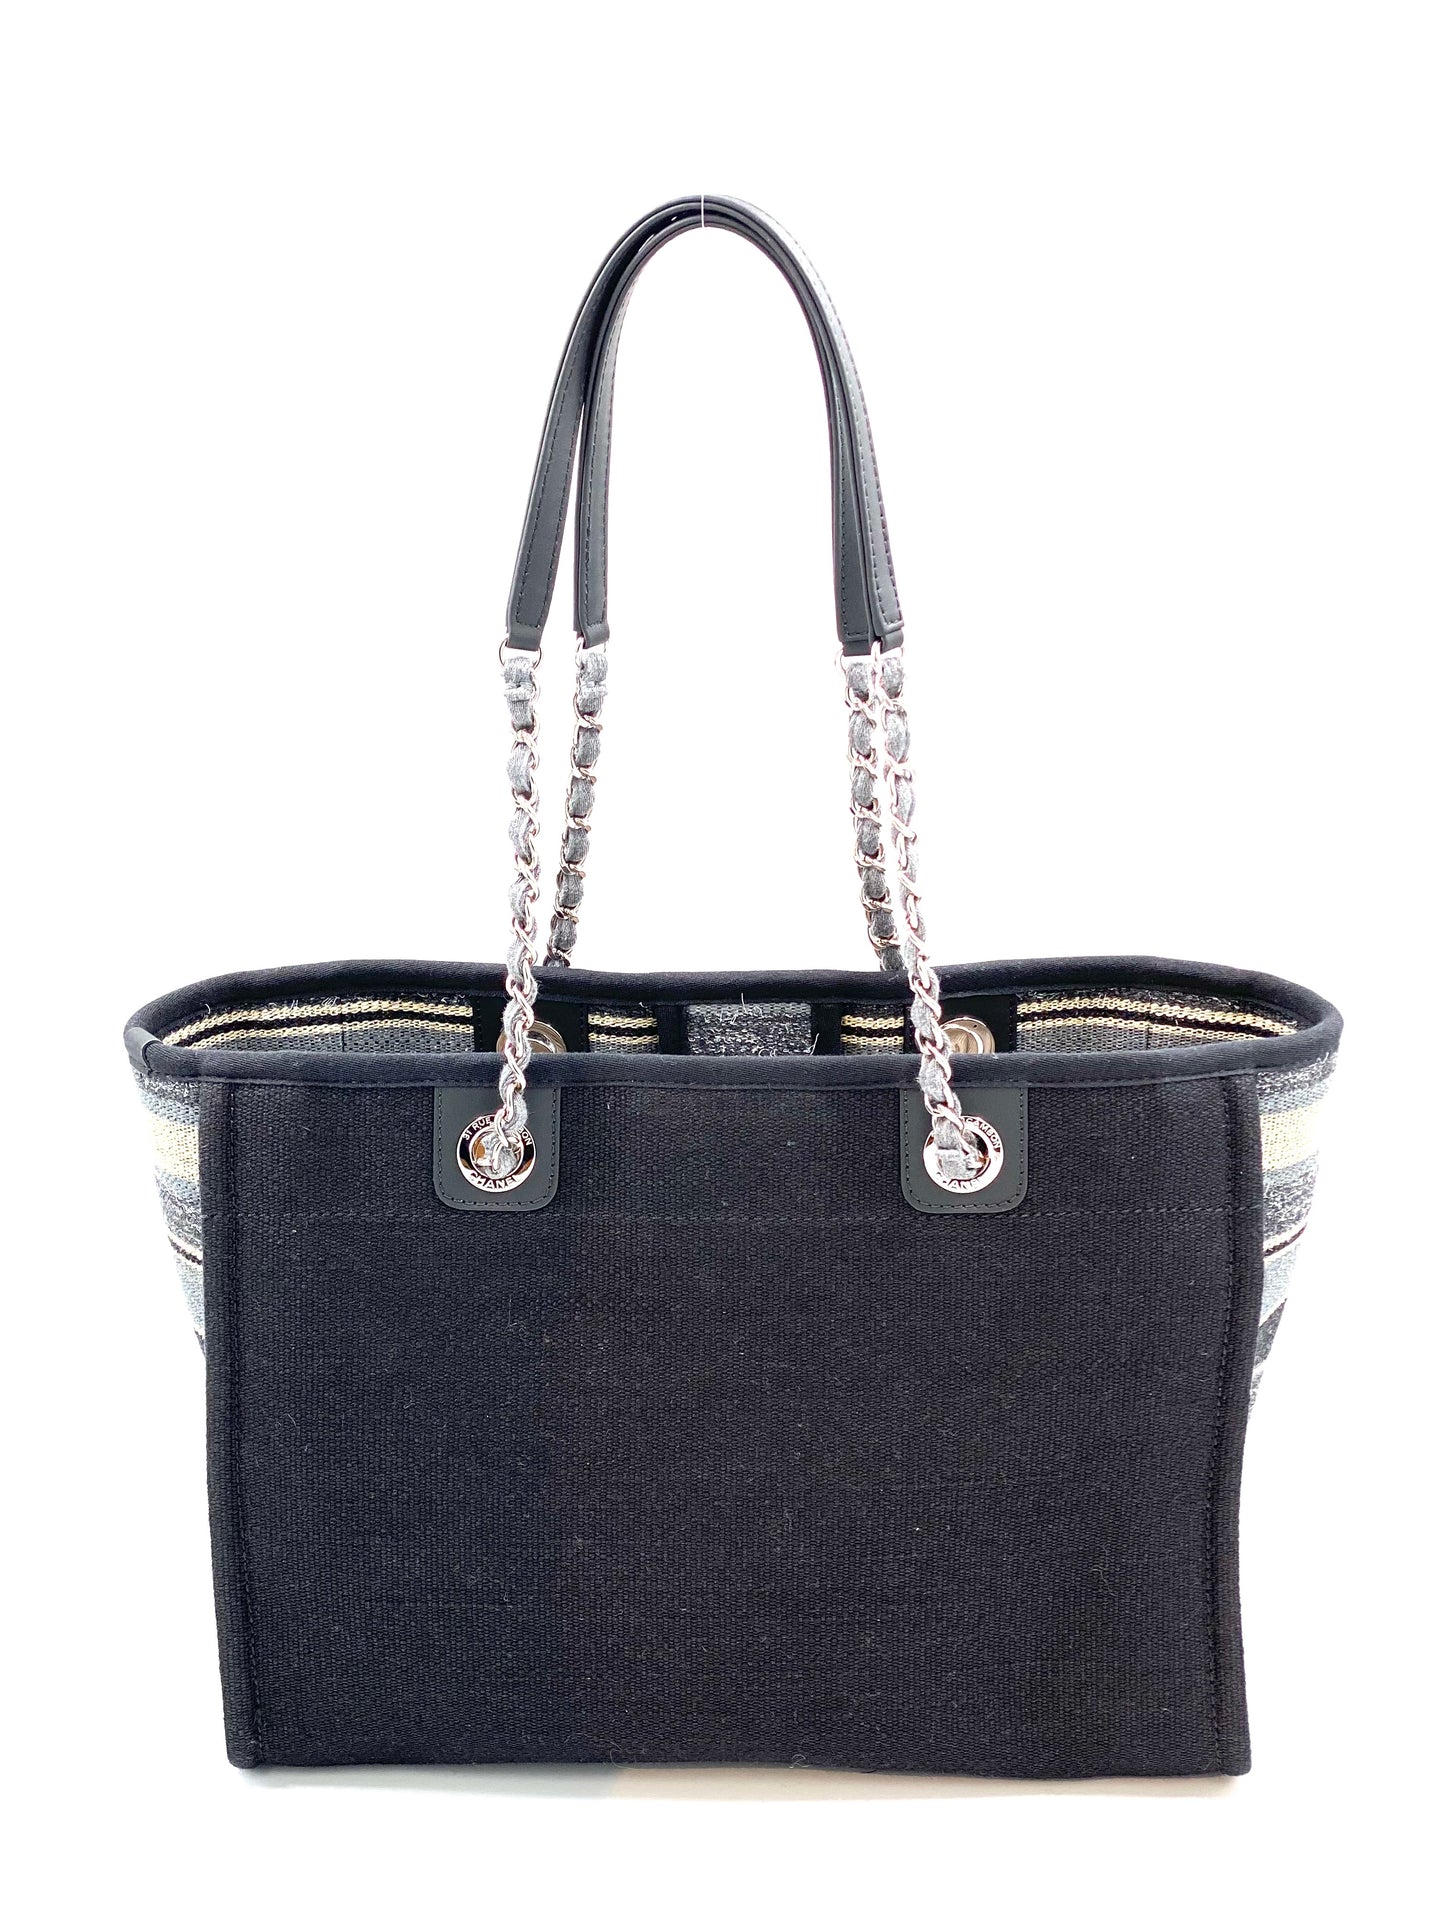 Chanel Deauville dunkelblau Tote Bag